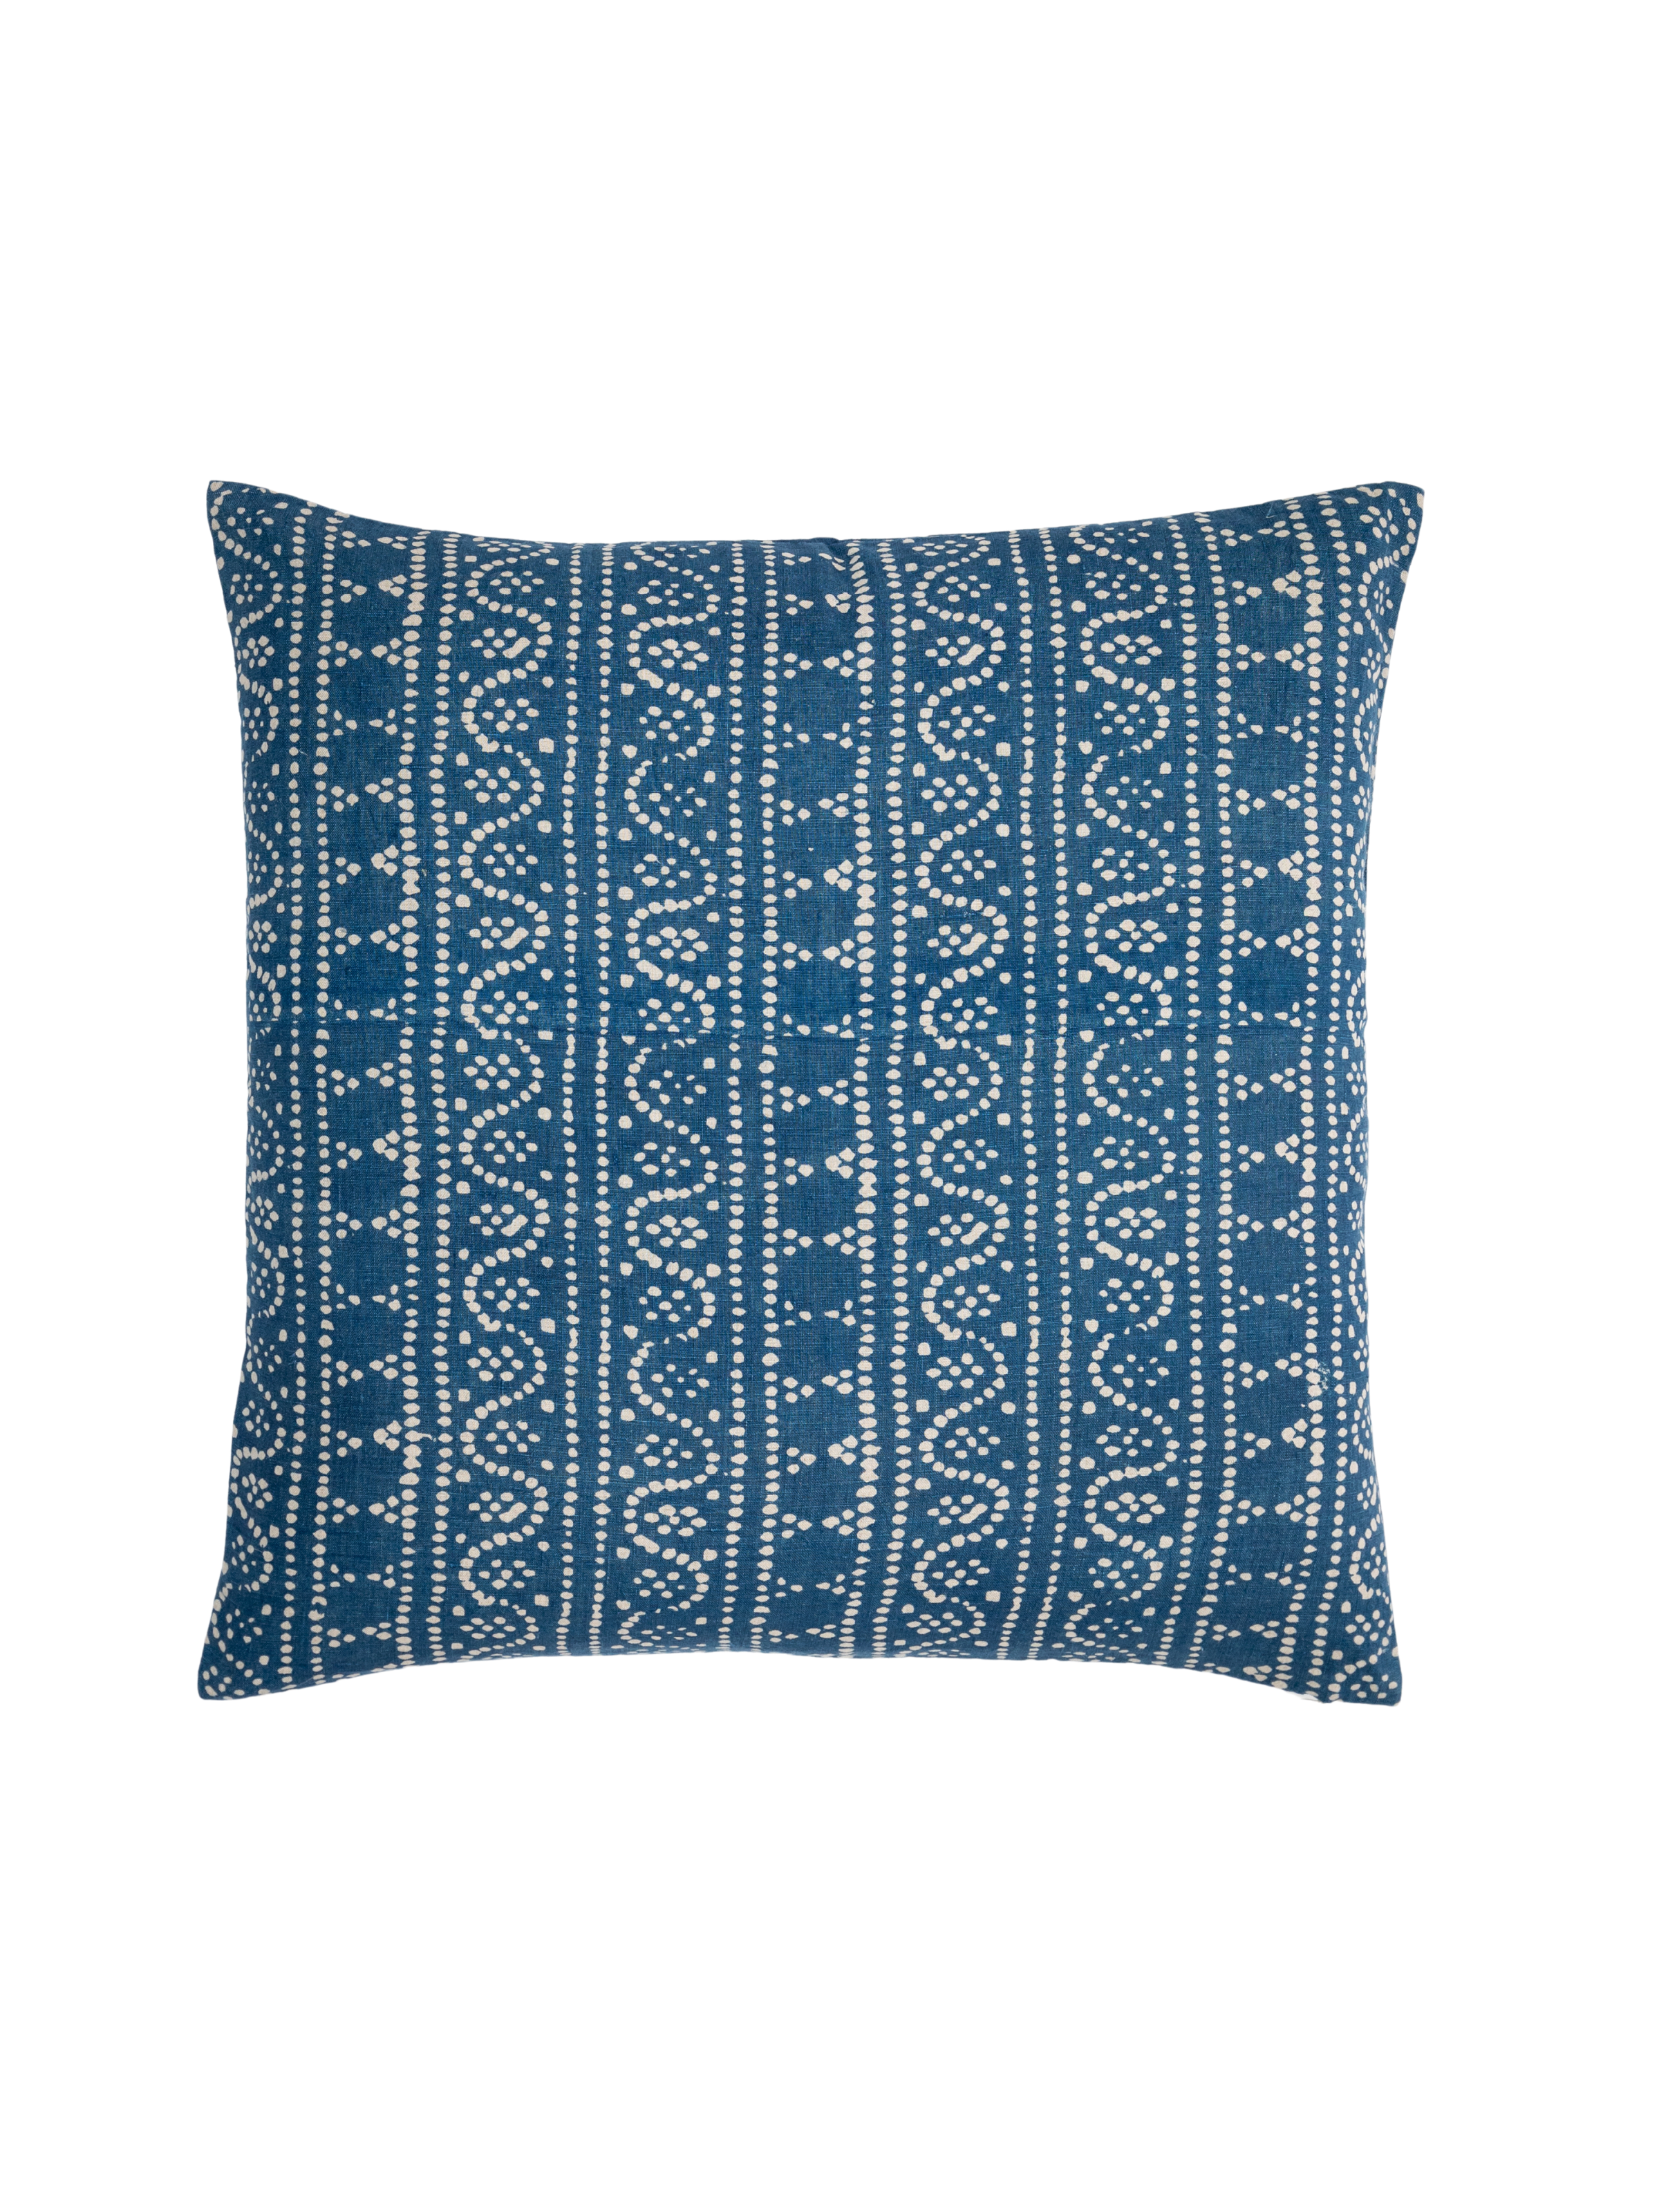 Sumatra Indigo Decorative Pillow Cover